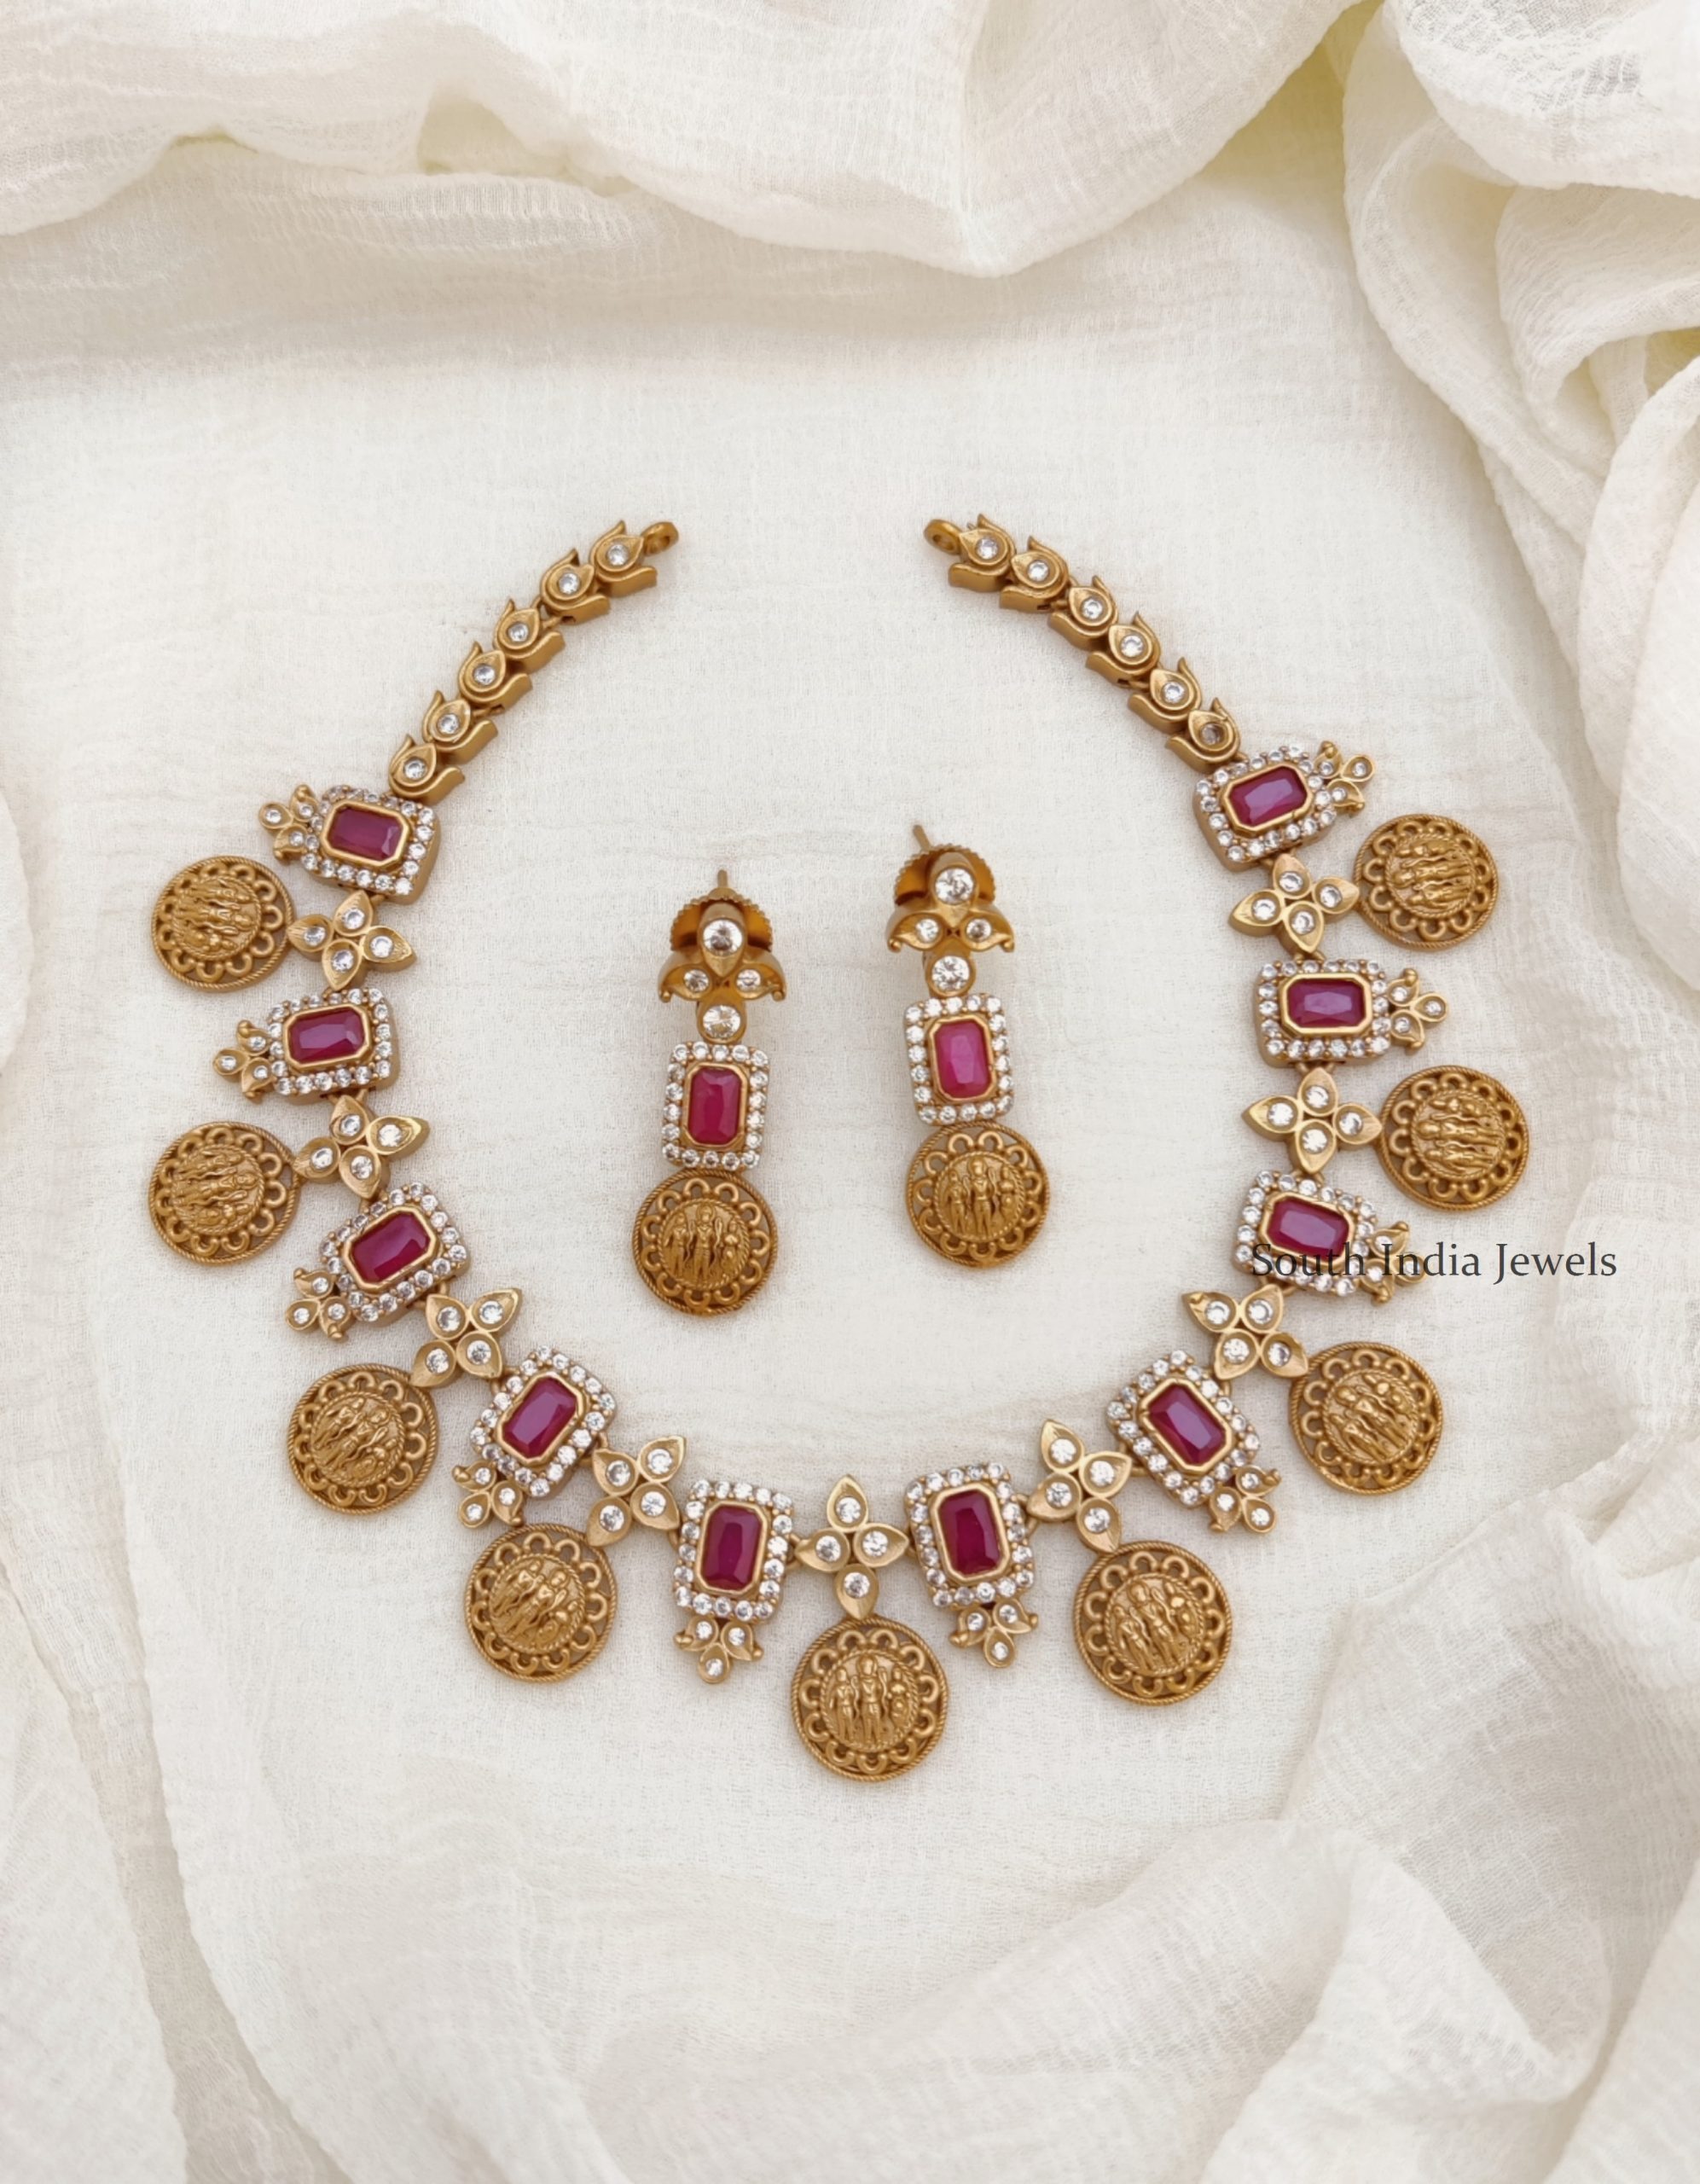 Ram Parivar AD Stone Necklace | AD Stone Necklace - South India Jewels